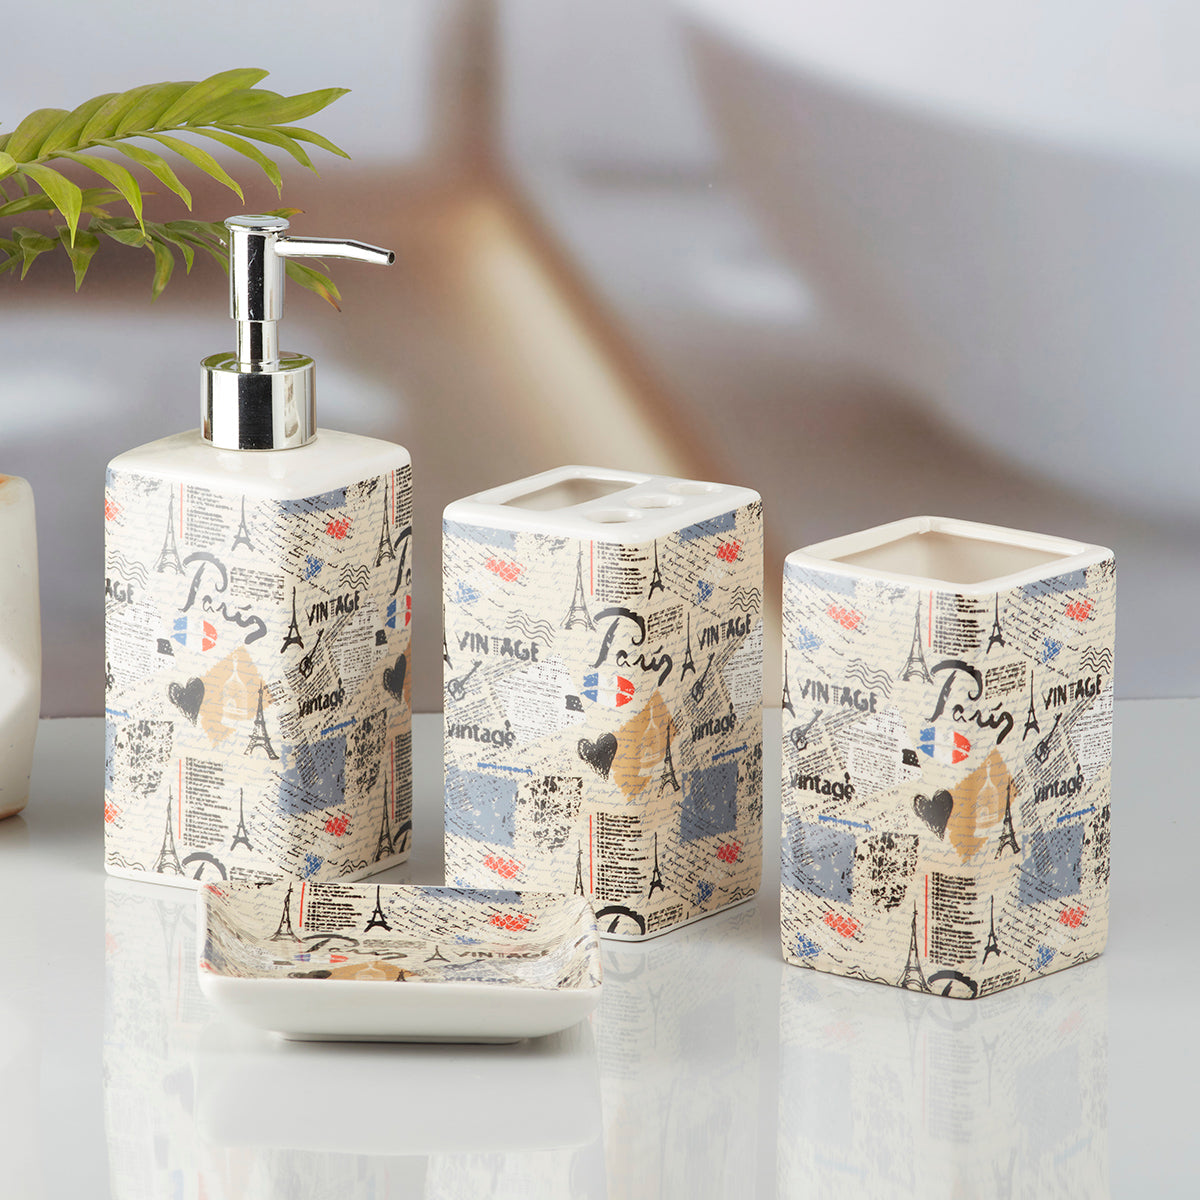 Ceramic Bathroom Accessories Set of 4 Bath Set with Soap Dispenser (10191)